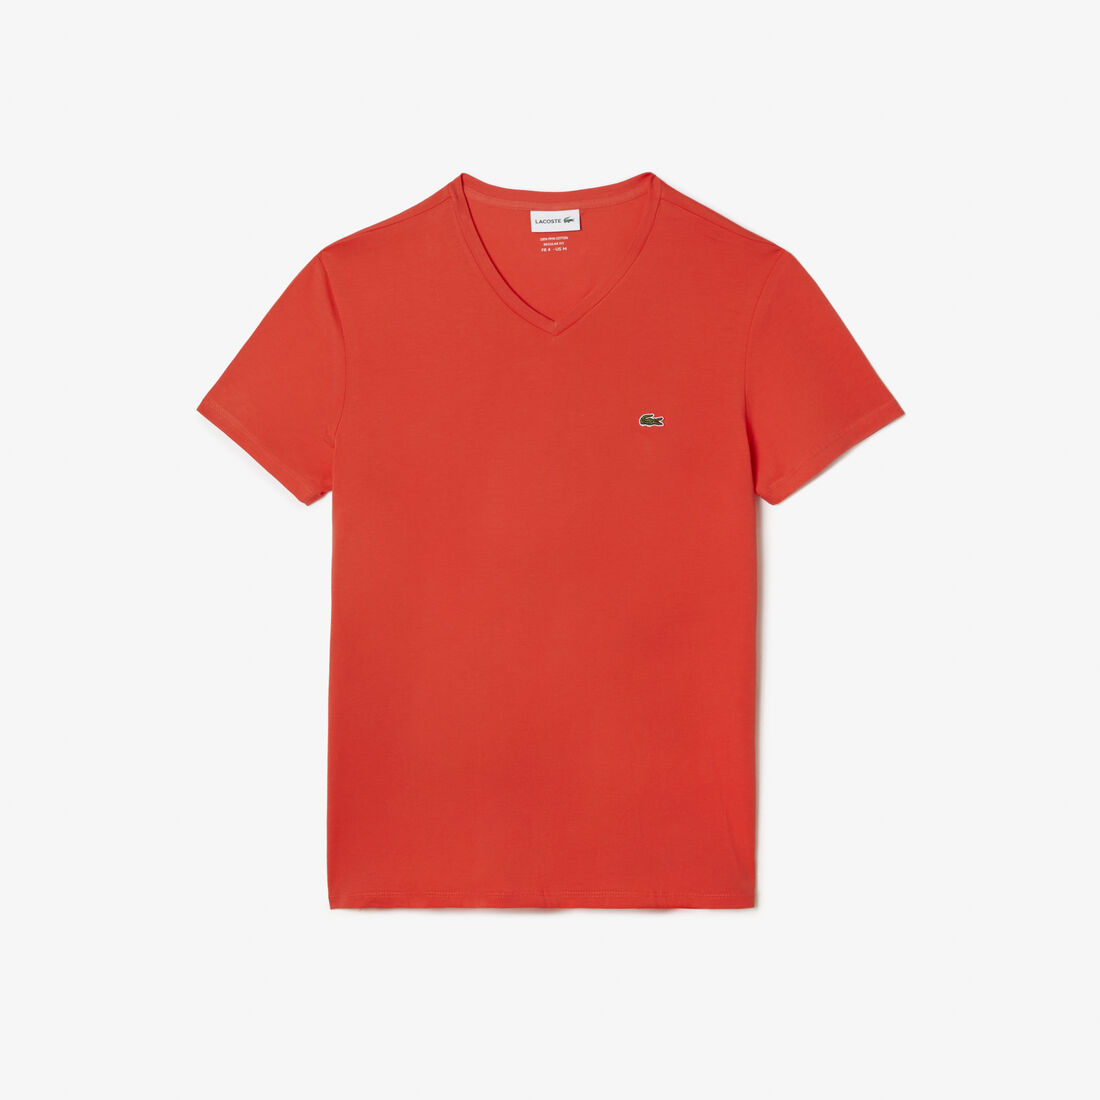 Lacoste - Pima Cotton Jersey T-Shirt, V-Neck - Orange